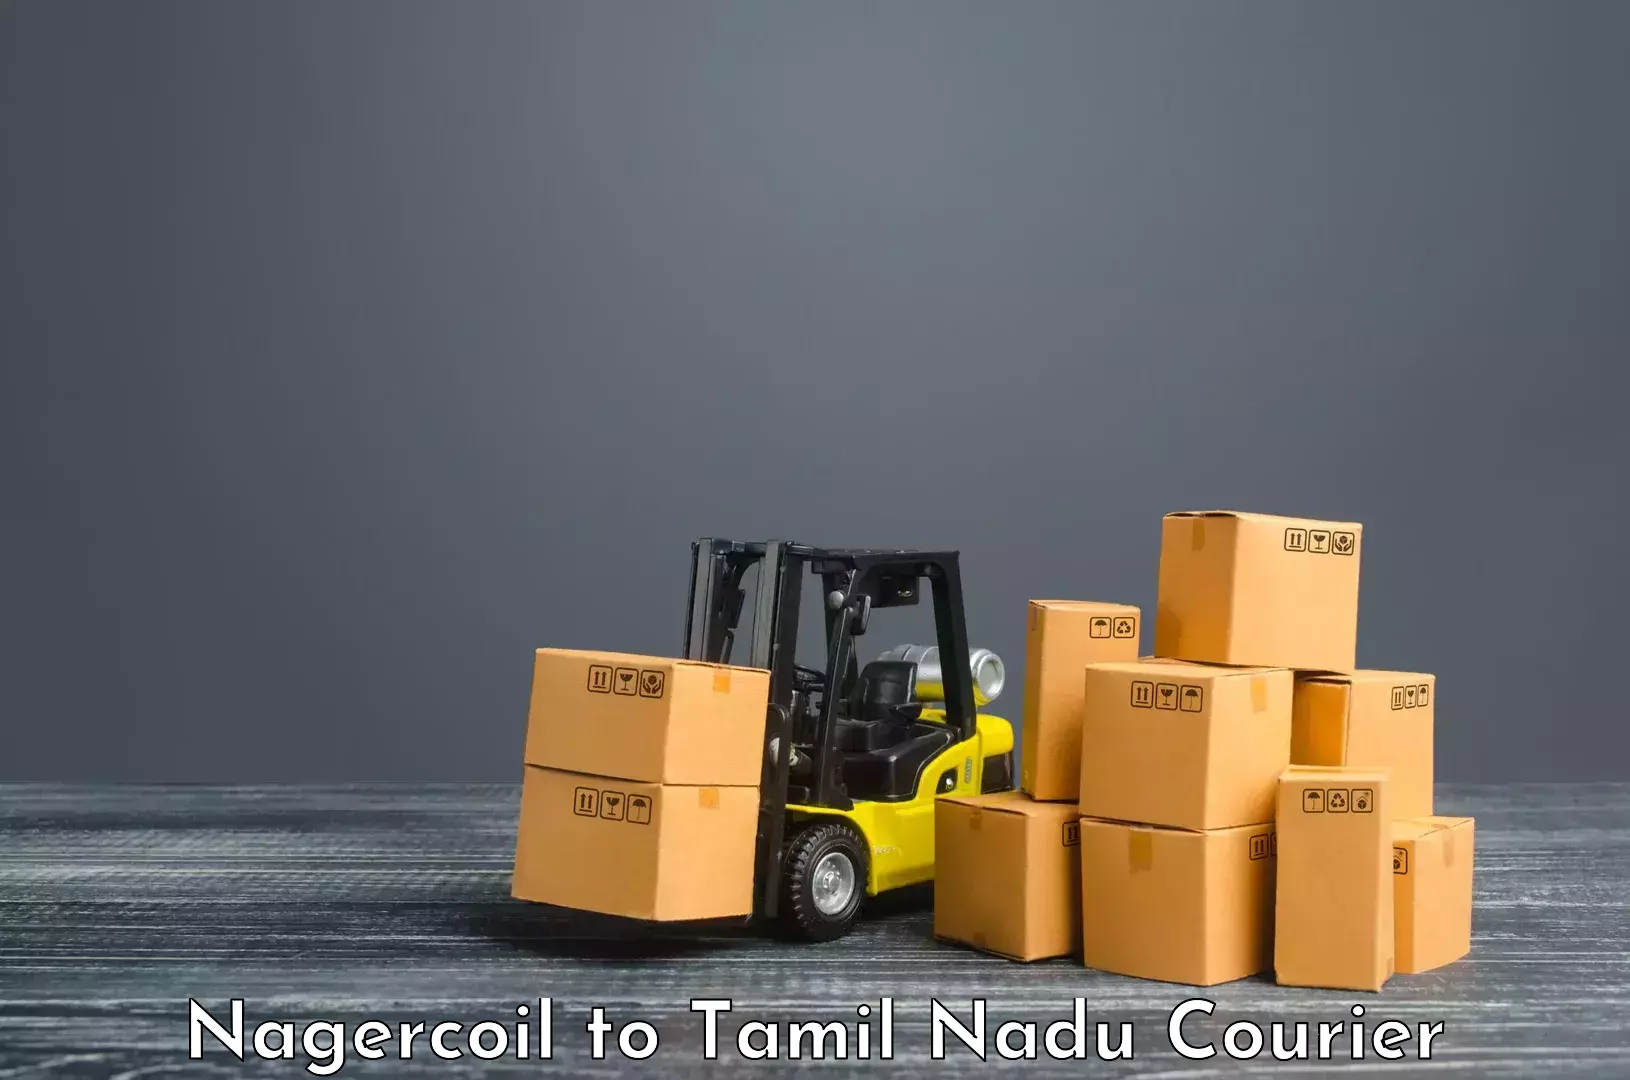 Digital courier platforms Nagercoil to Tiruchirappalli